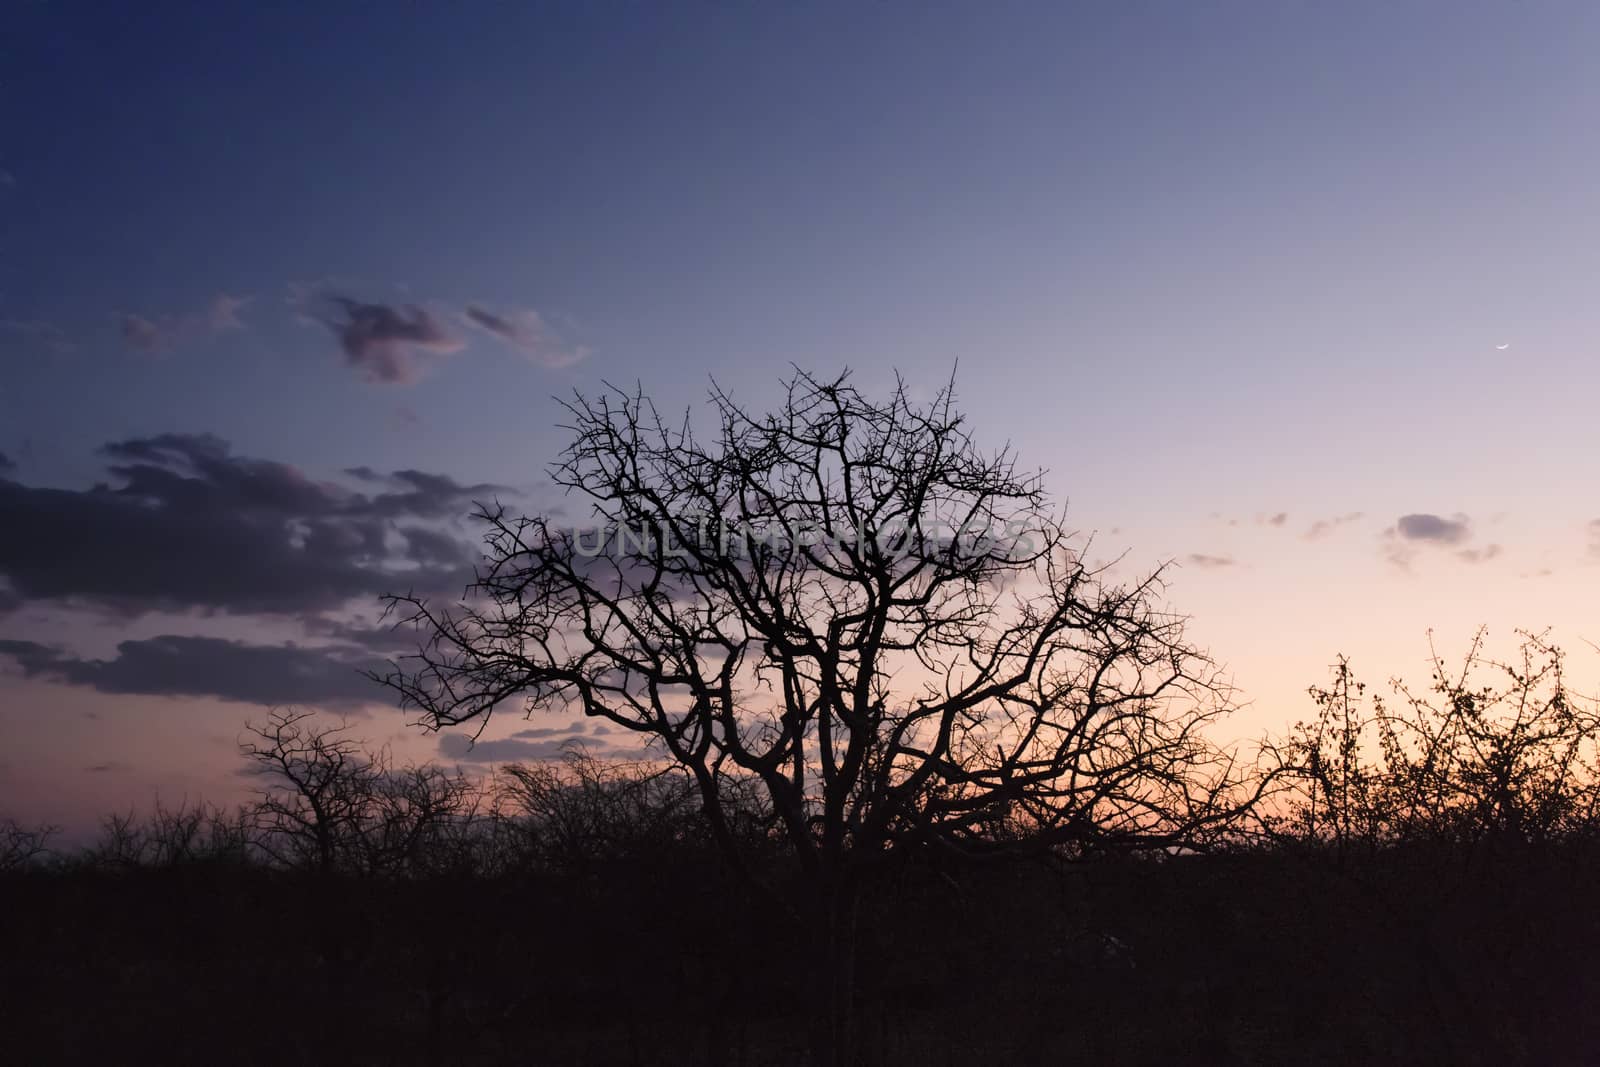 Sunset over the okavango delta in Botswana